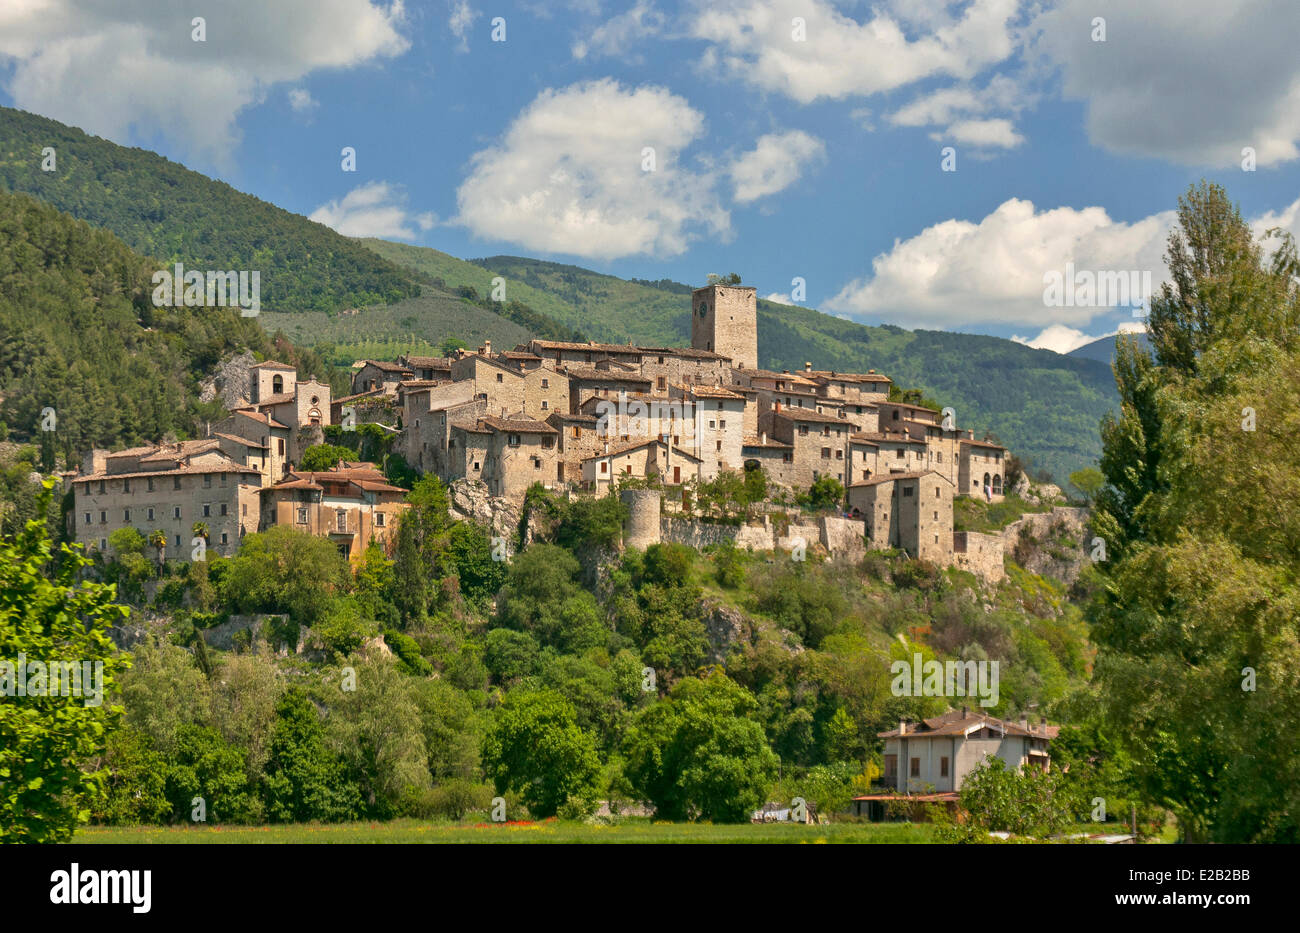 Italia, Umbria, la aldea de Valnerina Arone Foto de stock